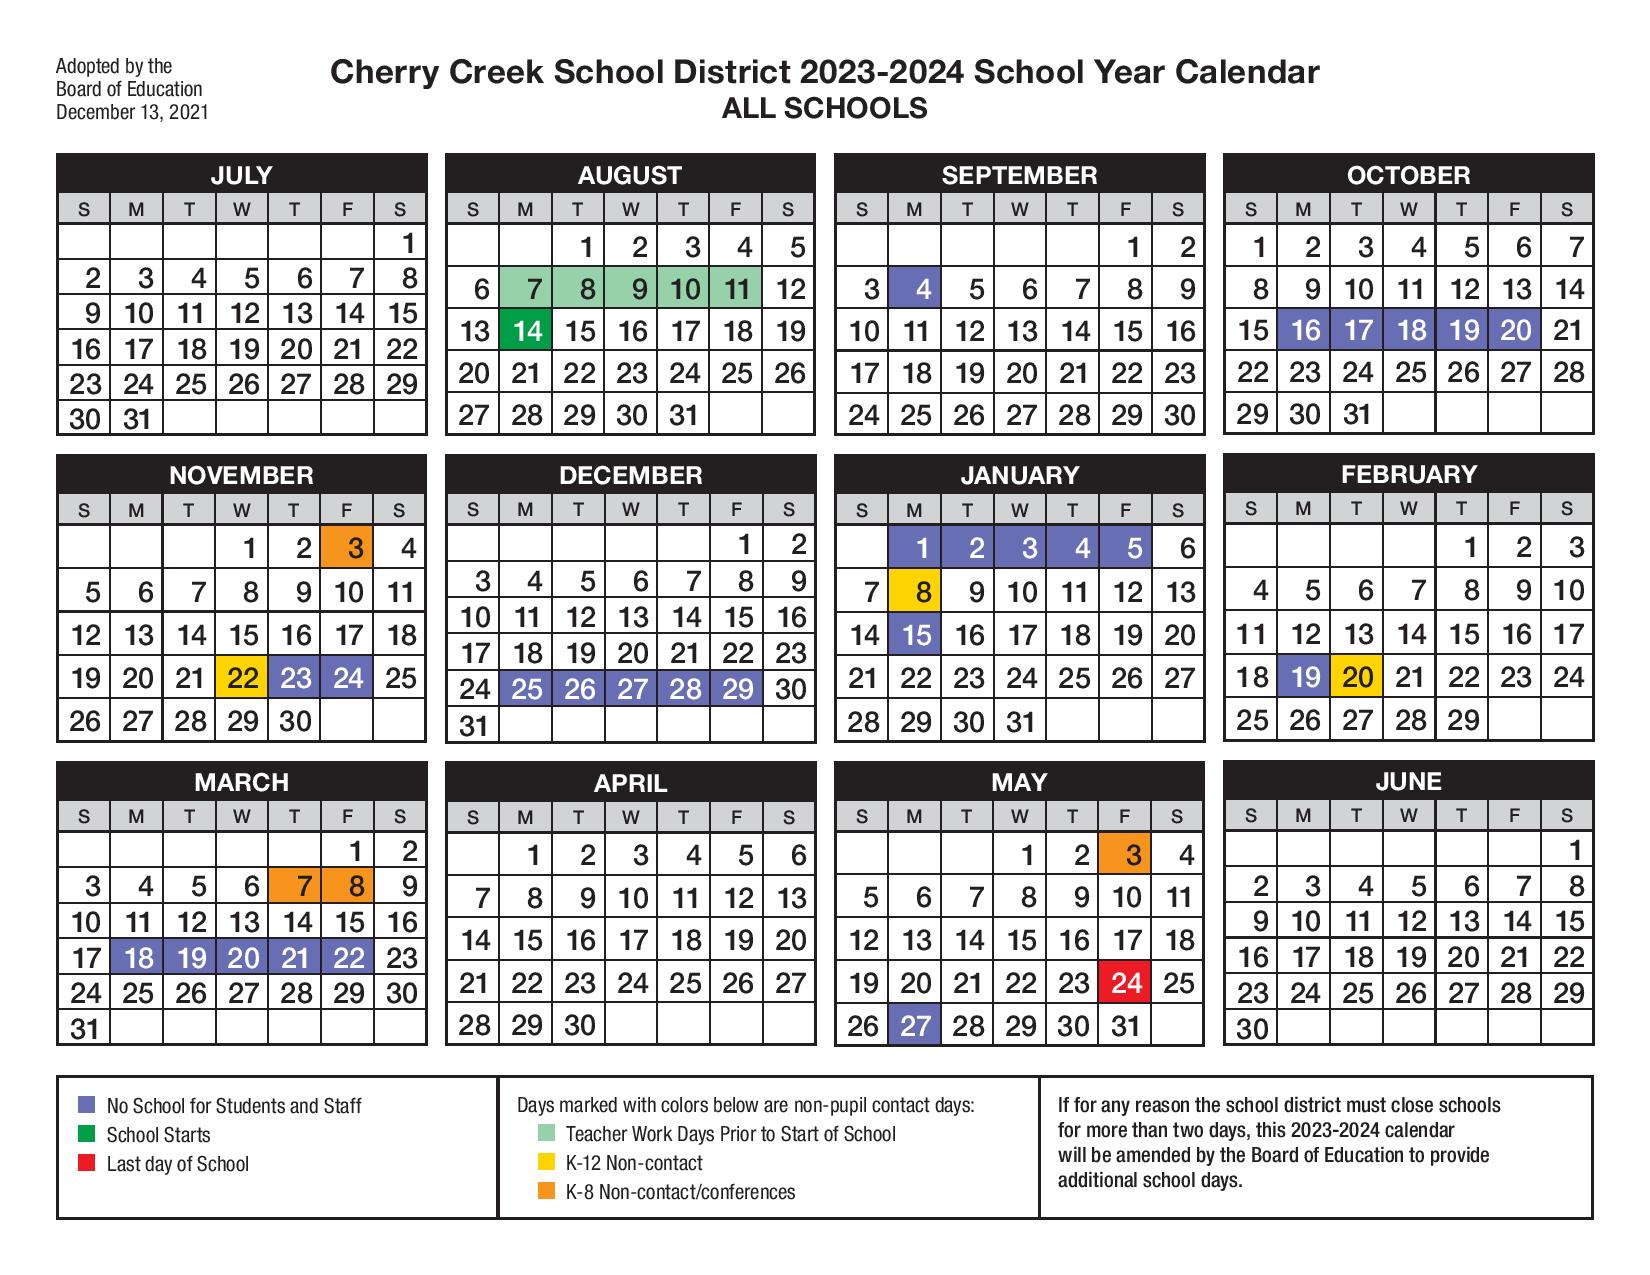 cherry-creek-school-district-calendar-2023-2024-in-pdf